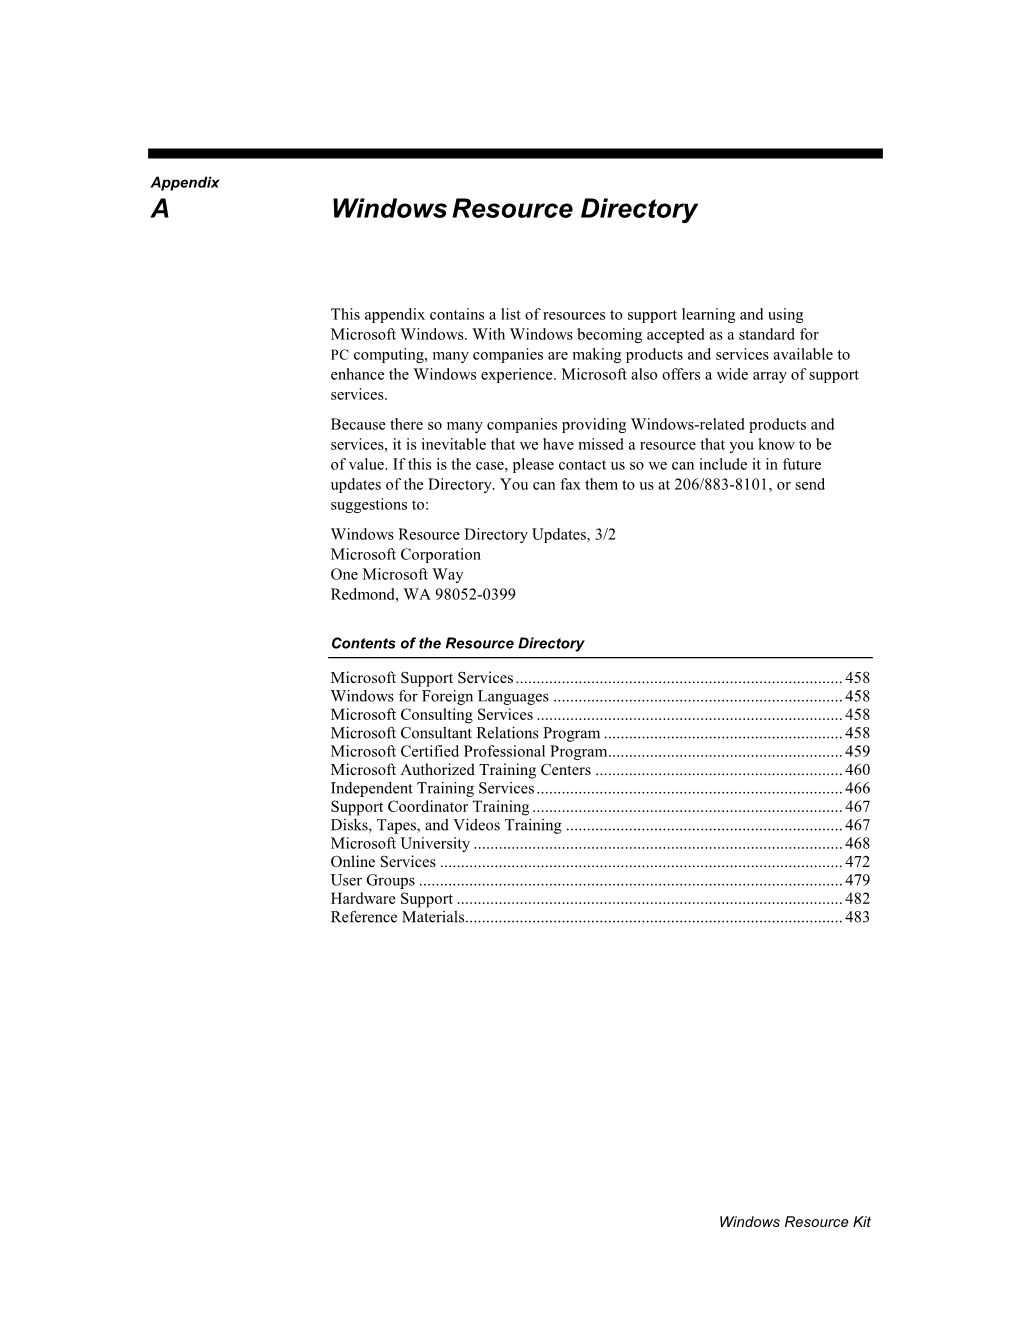 Microsoft Windows Resource